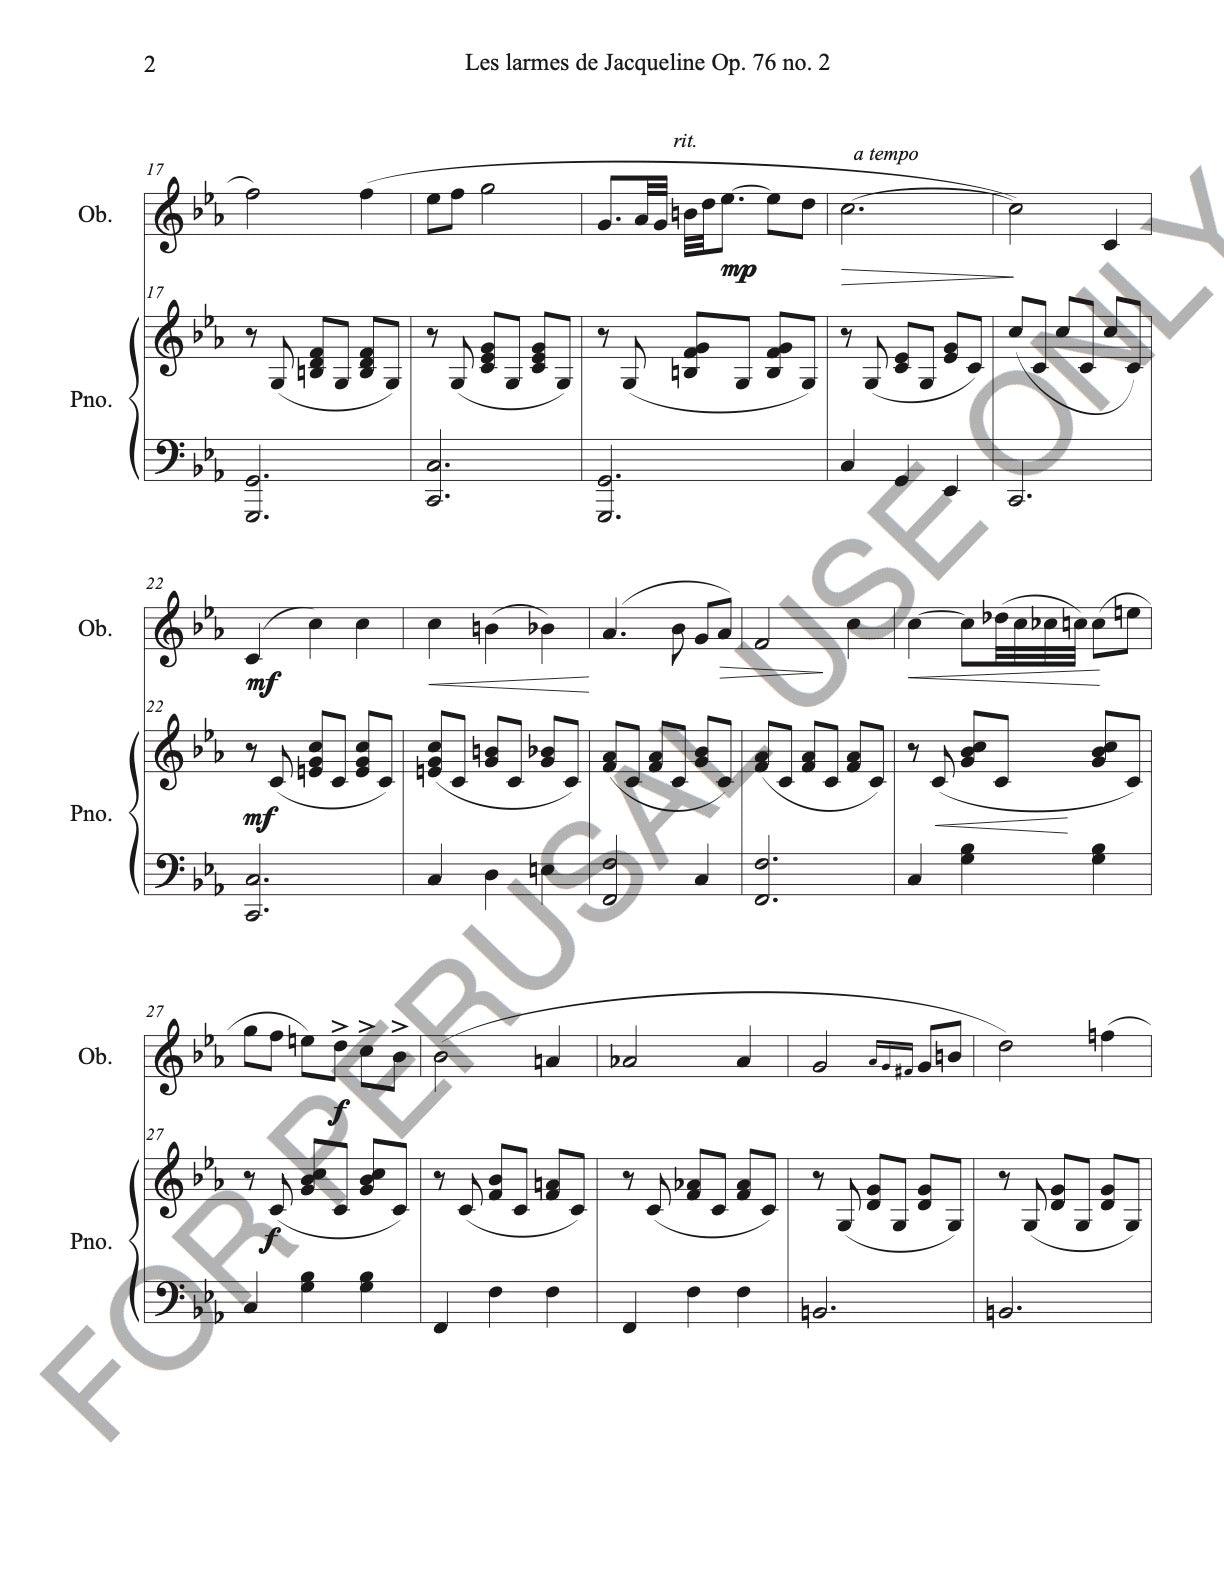 Oboe and Piano Sheet music: Les larmes de Jacqueline - Offenbach - ChaipruckMekara